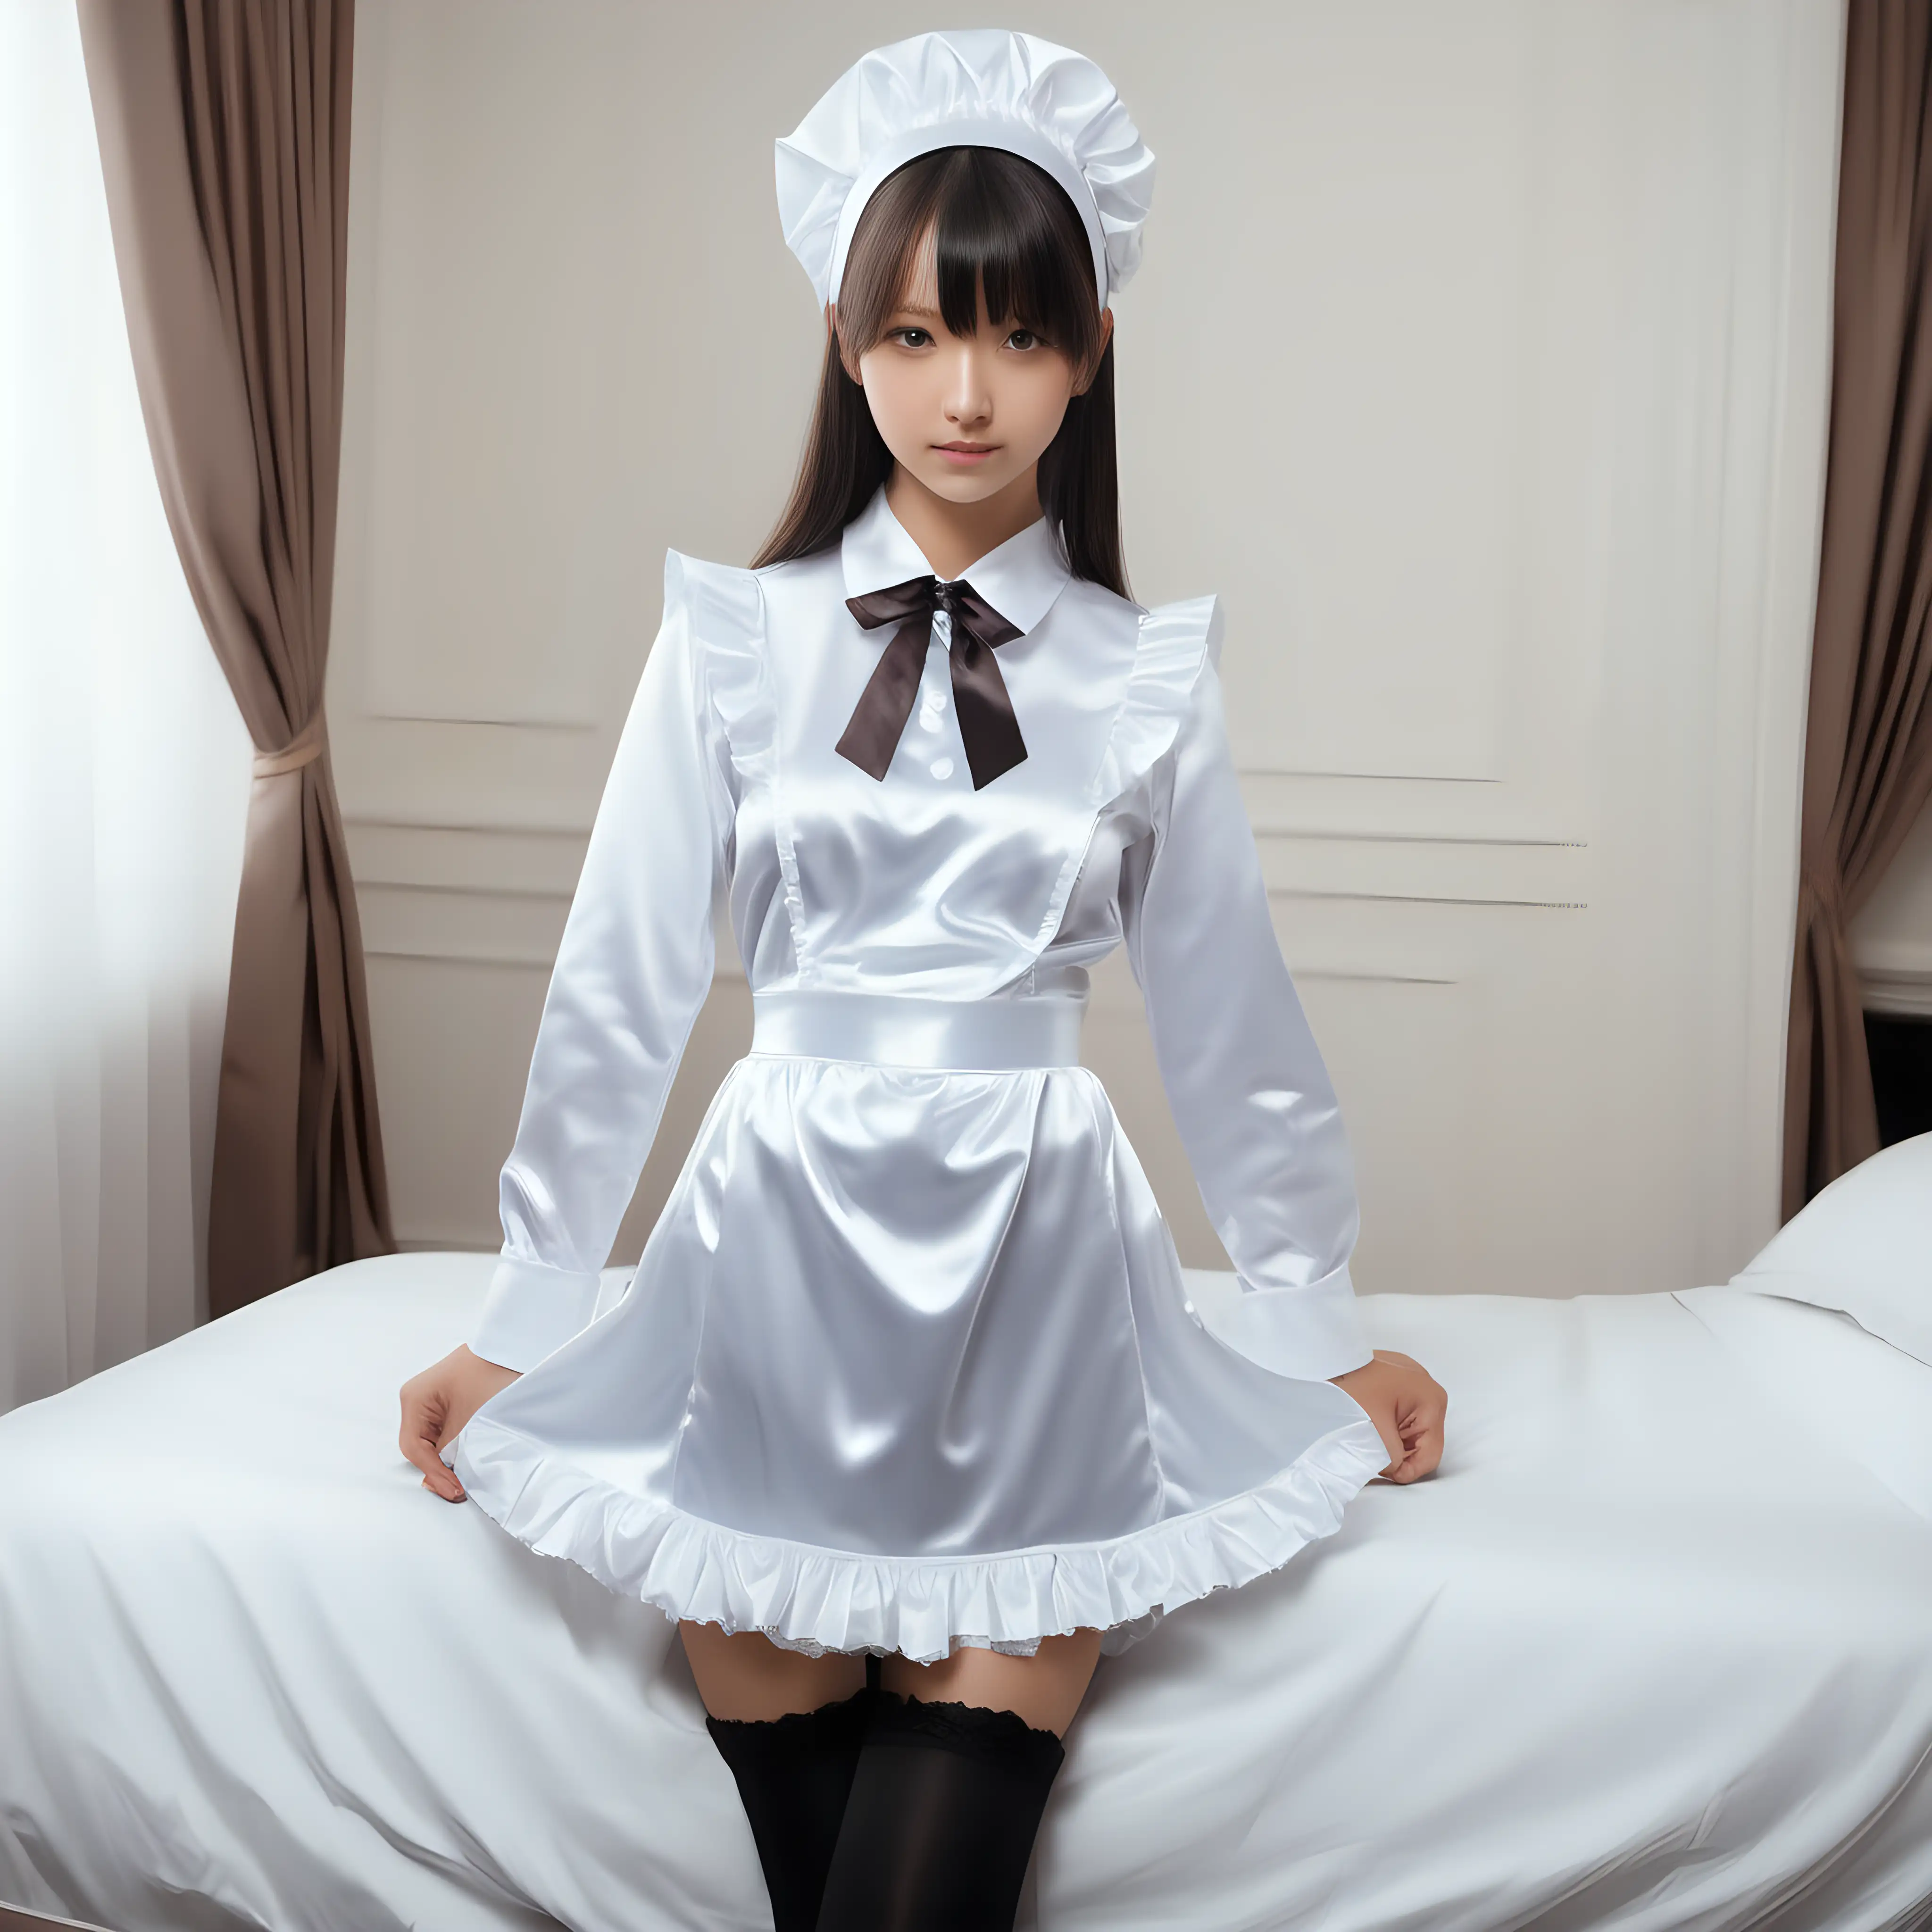 Charming Girl in Elegant Satin Maid Uniforms Poses Gracefully